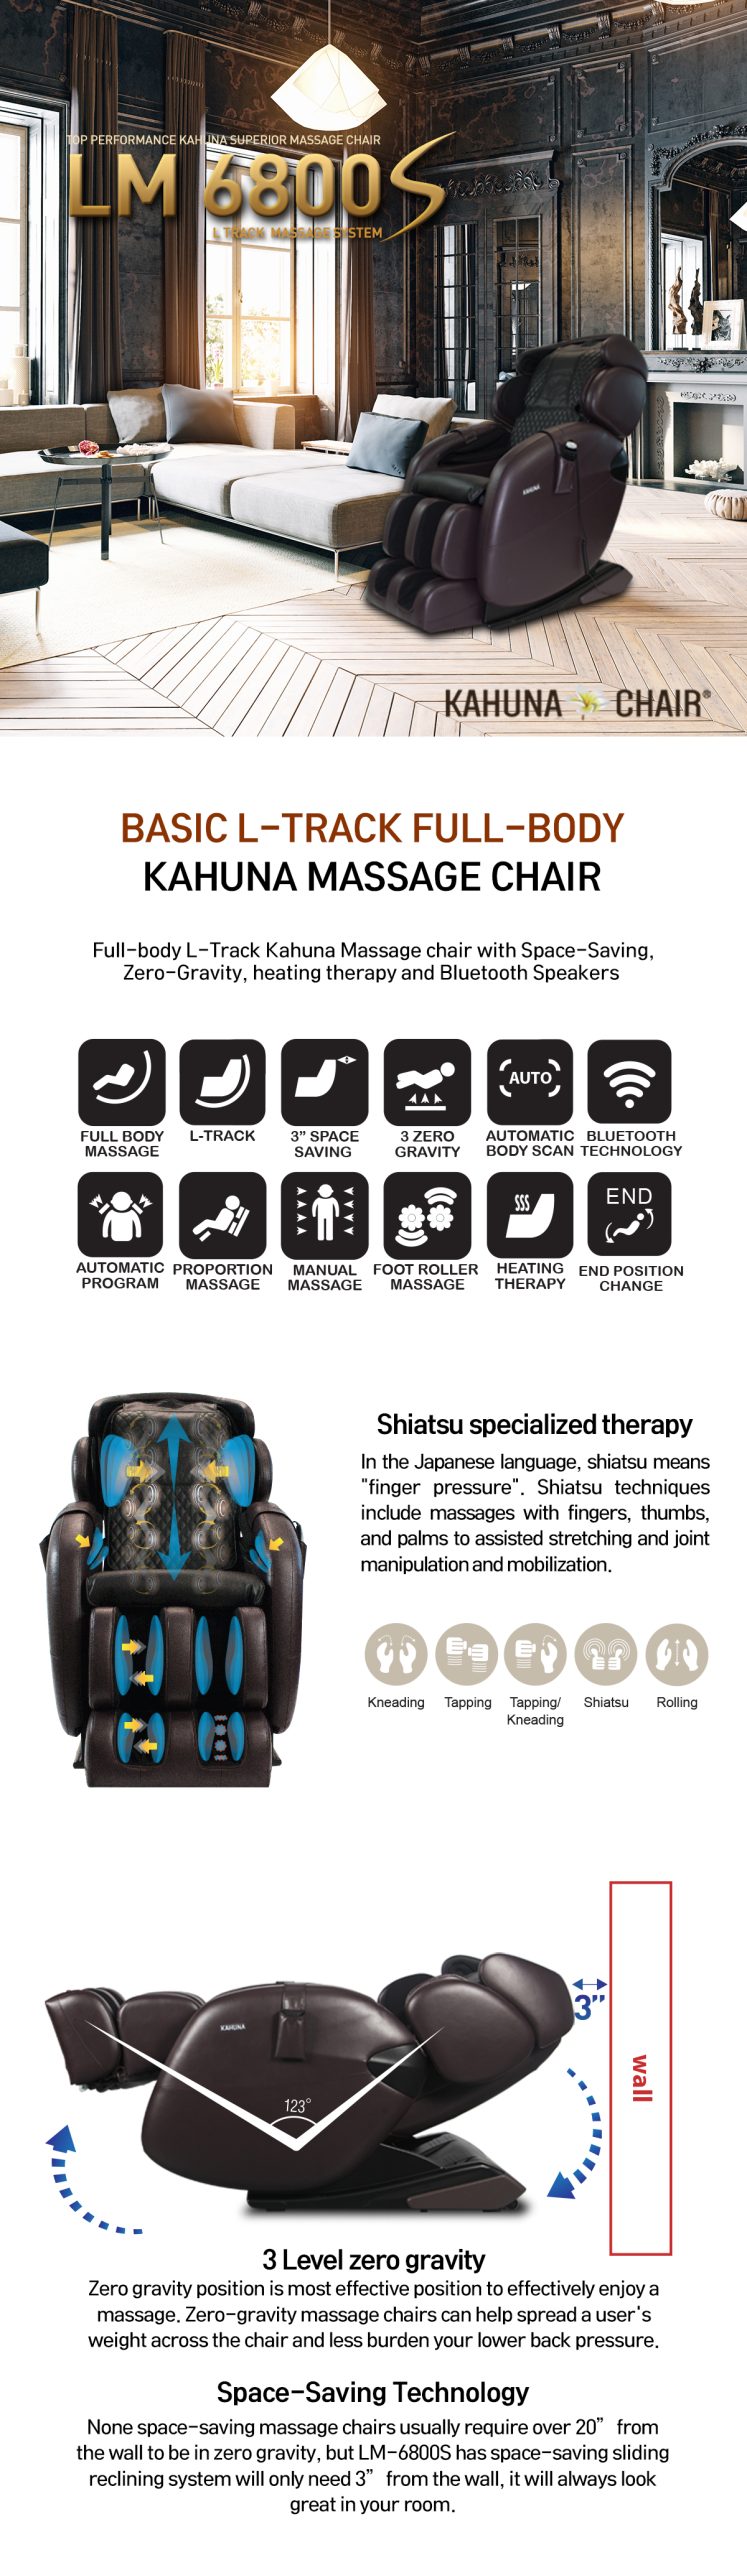 Kahuna LM06800s Massage Chair